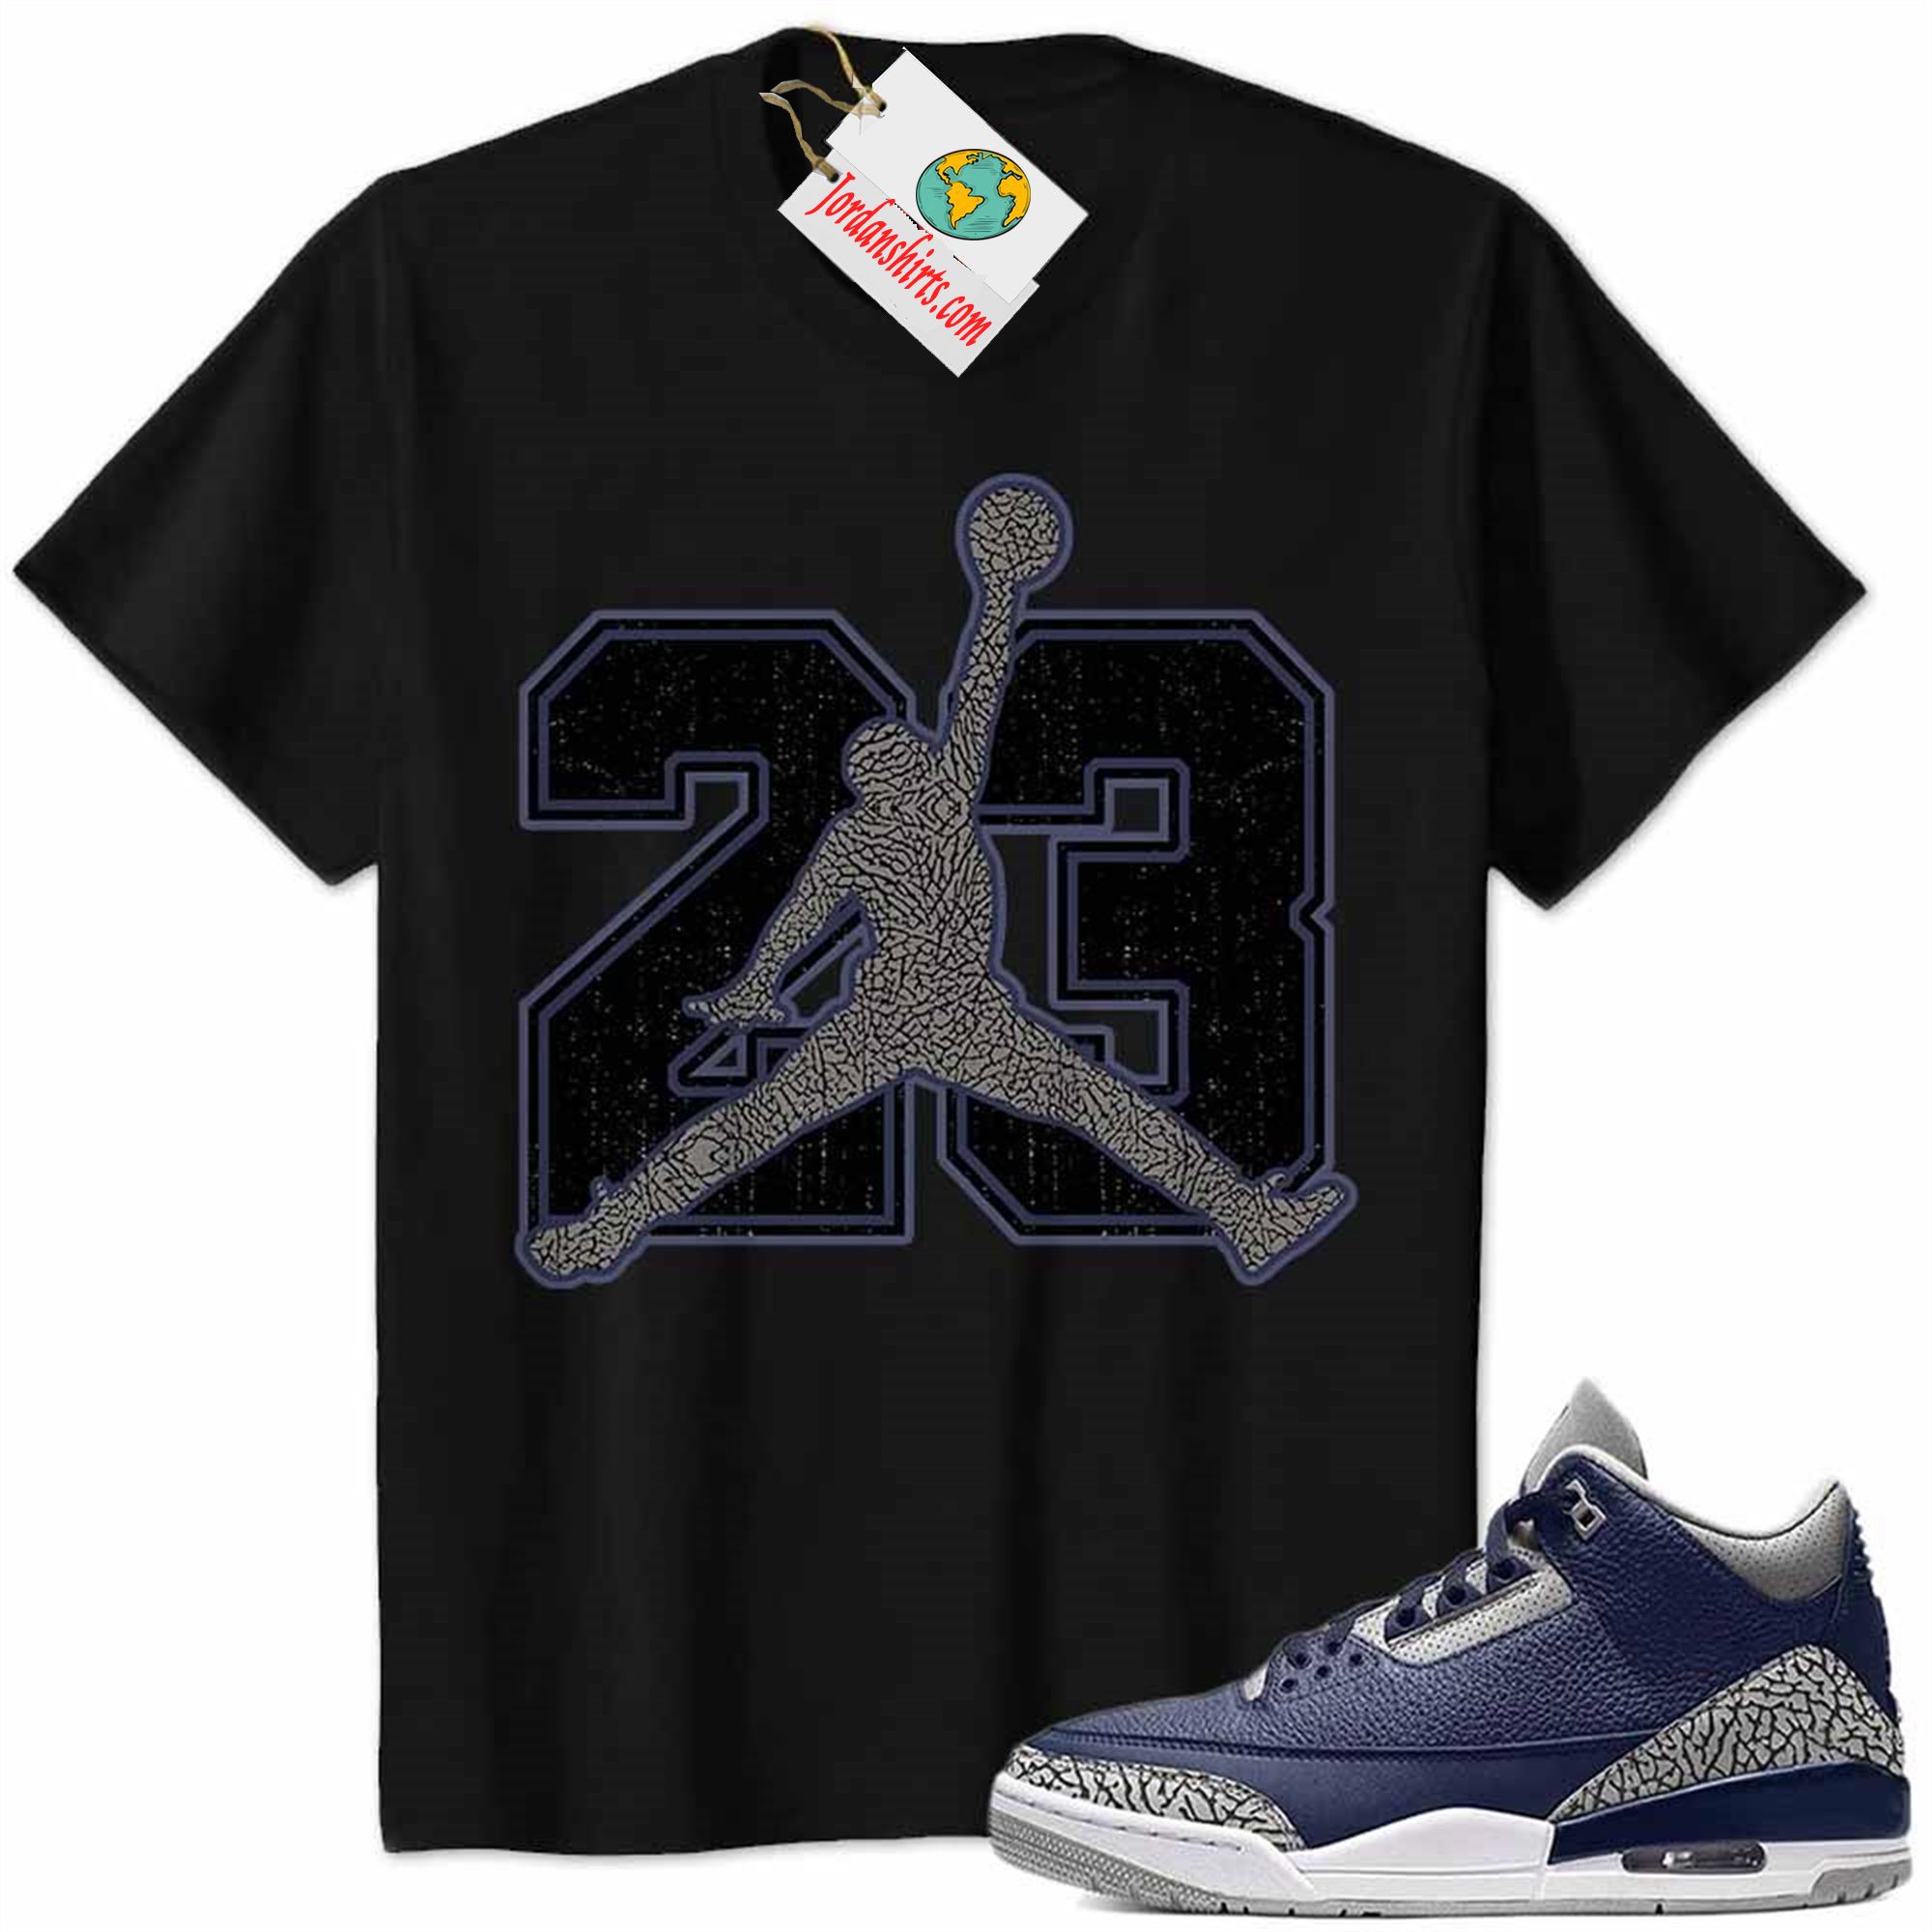 Jordan 3 Shirt, Jordan 3 Georgetown Midnight Navy Shirt Jumpman No23 Black Full Size Up To 5xl